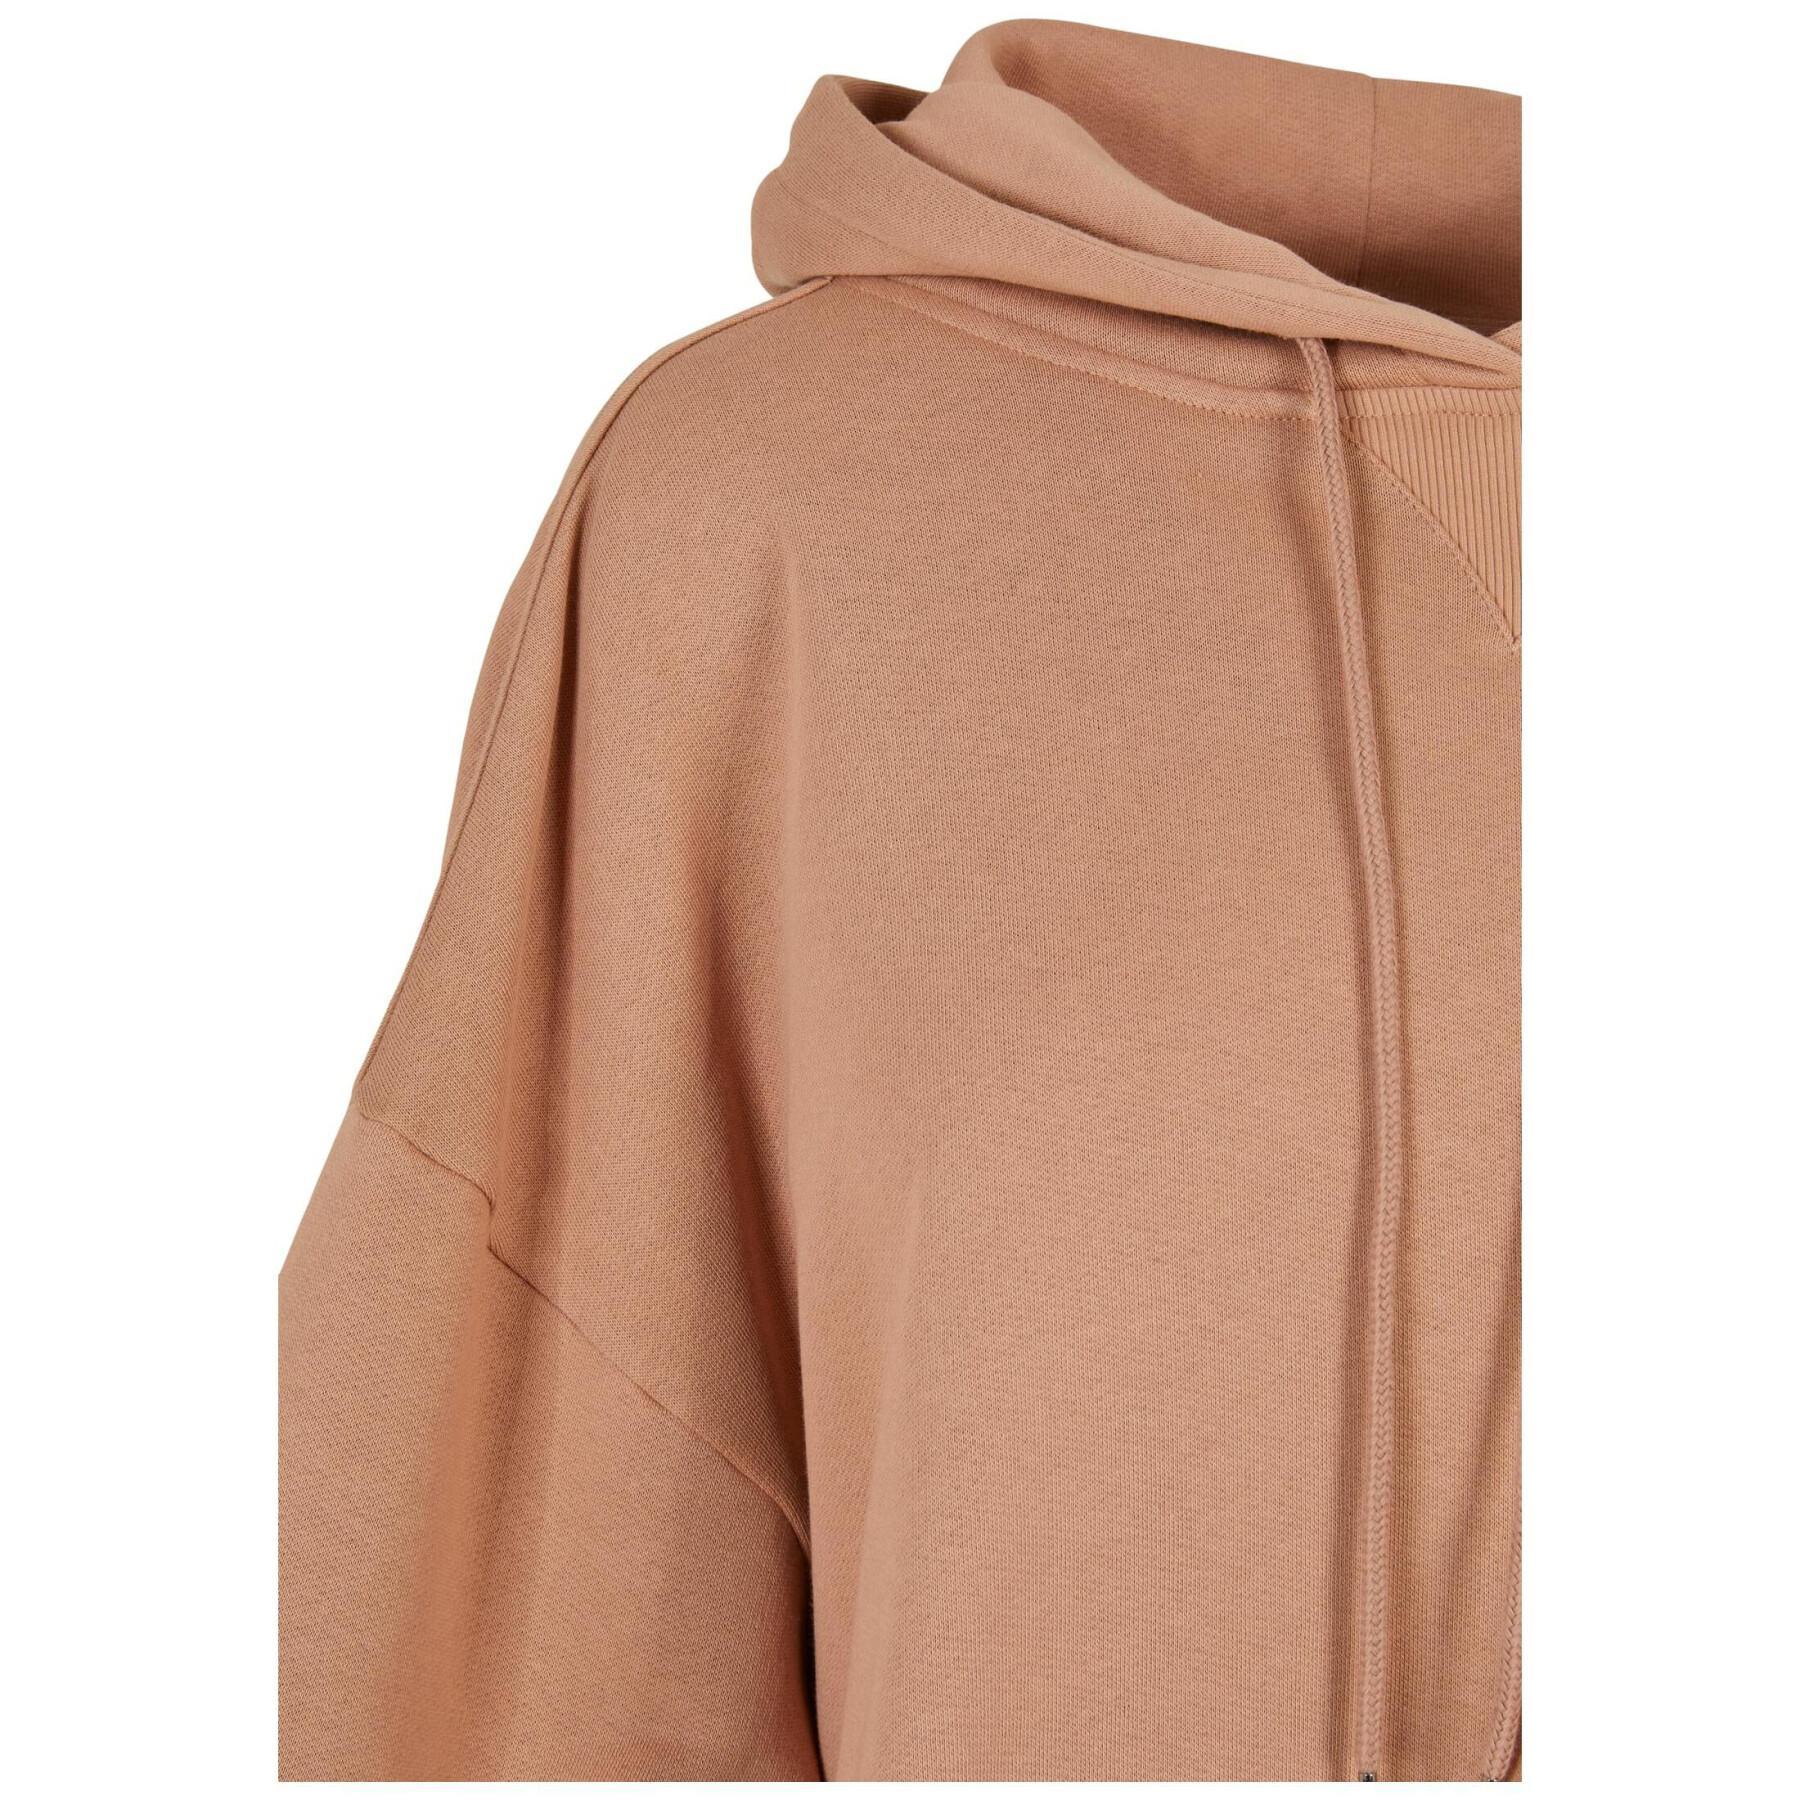 Sweat oversized hoodie for women Urban Classics Organic Terry